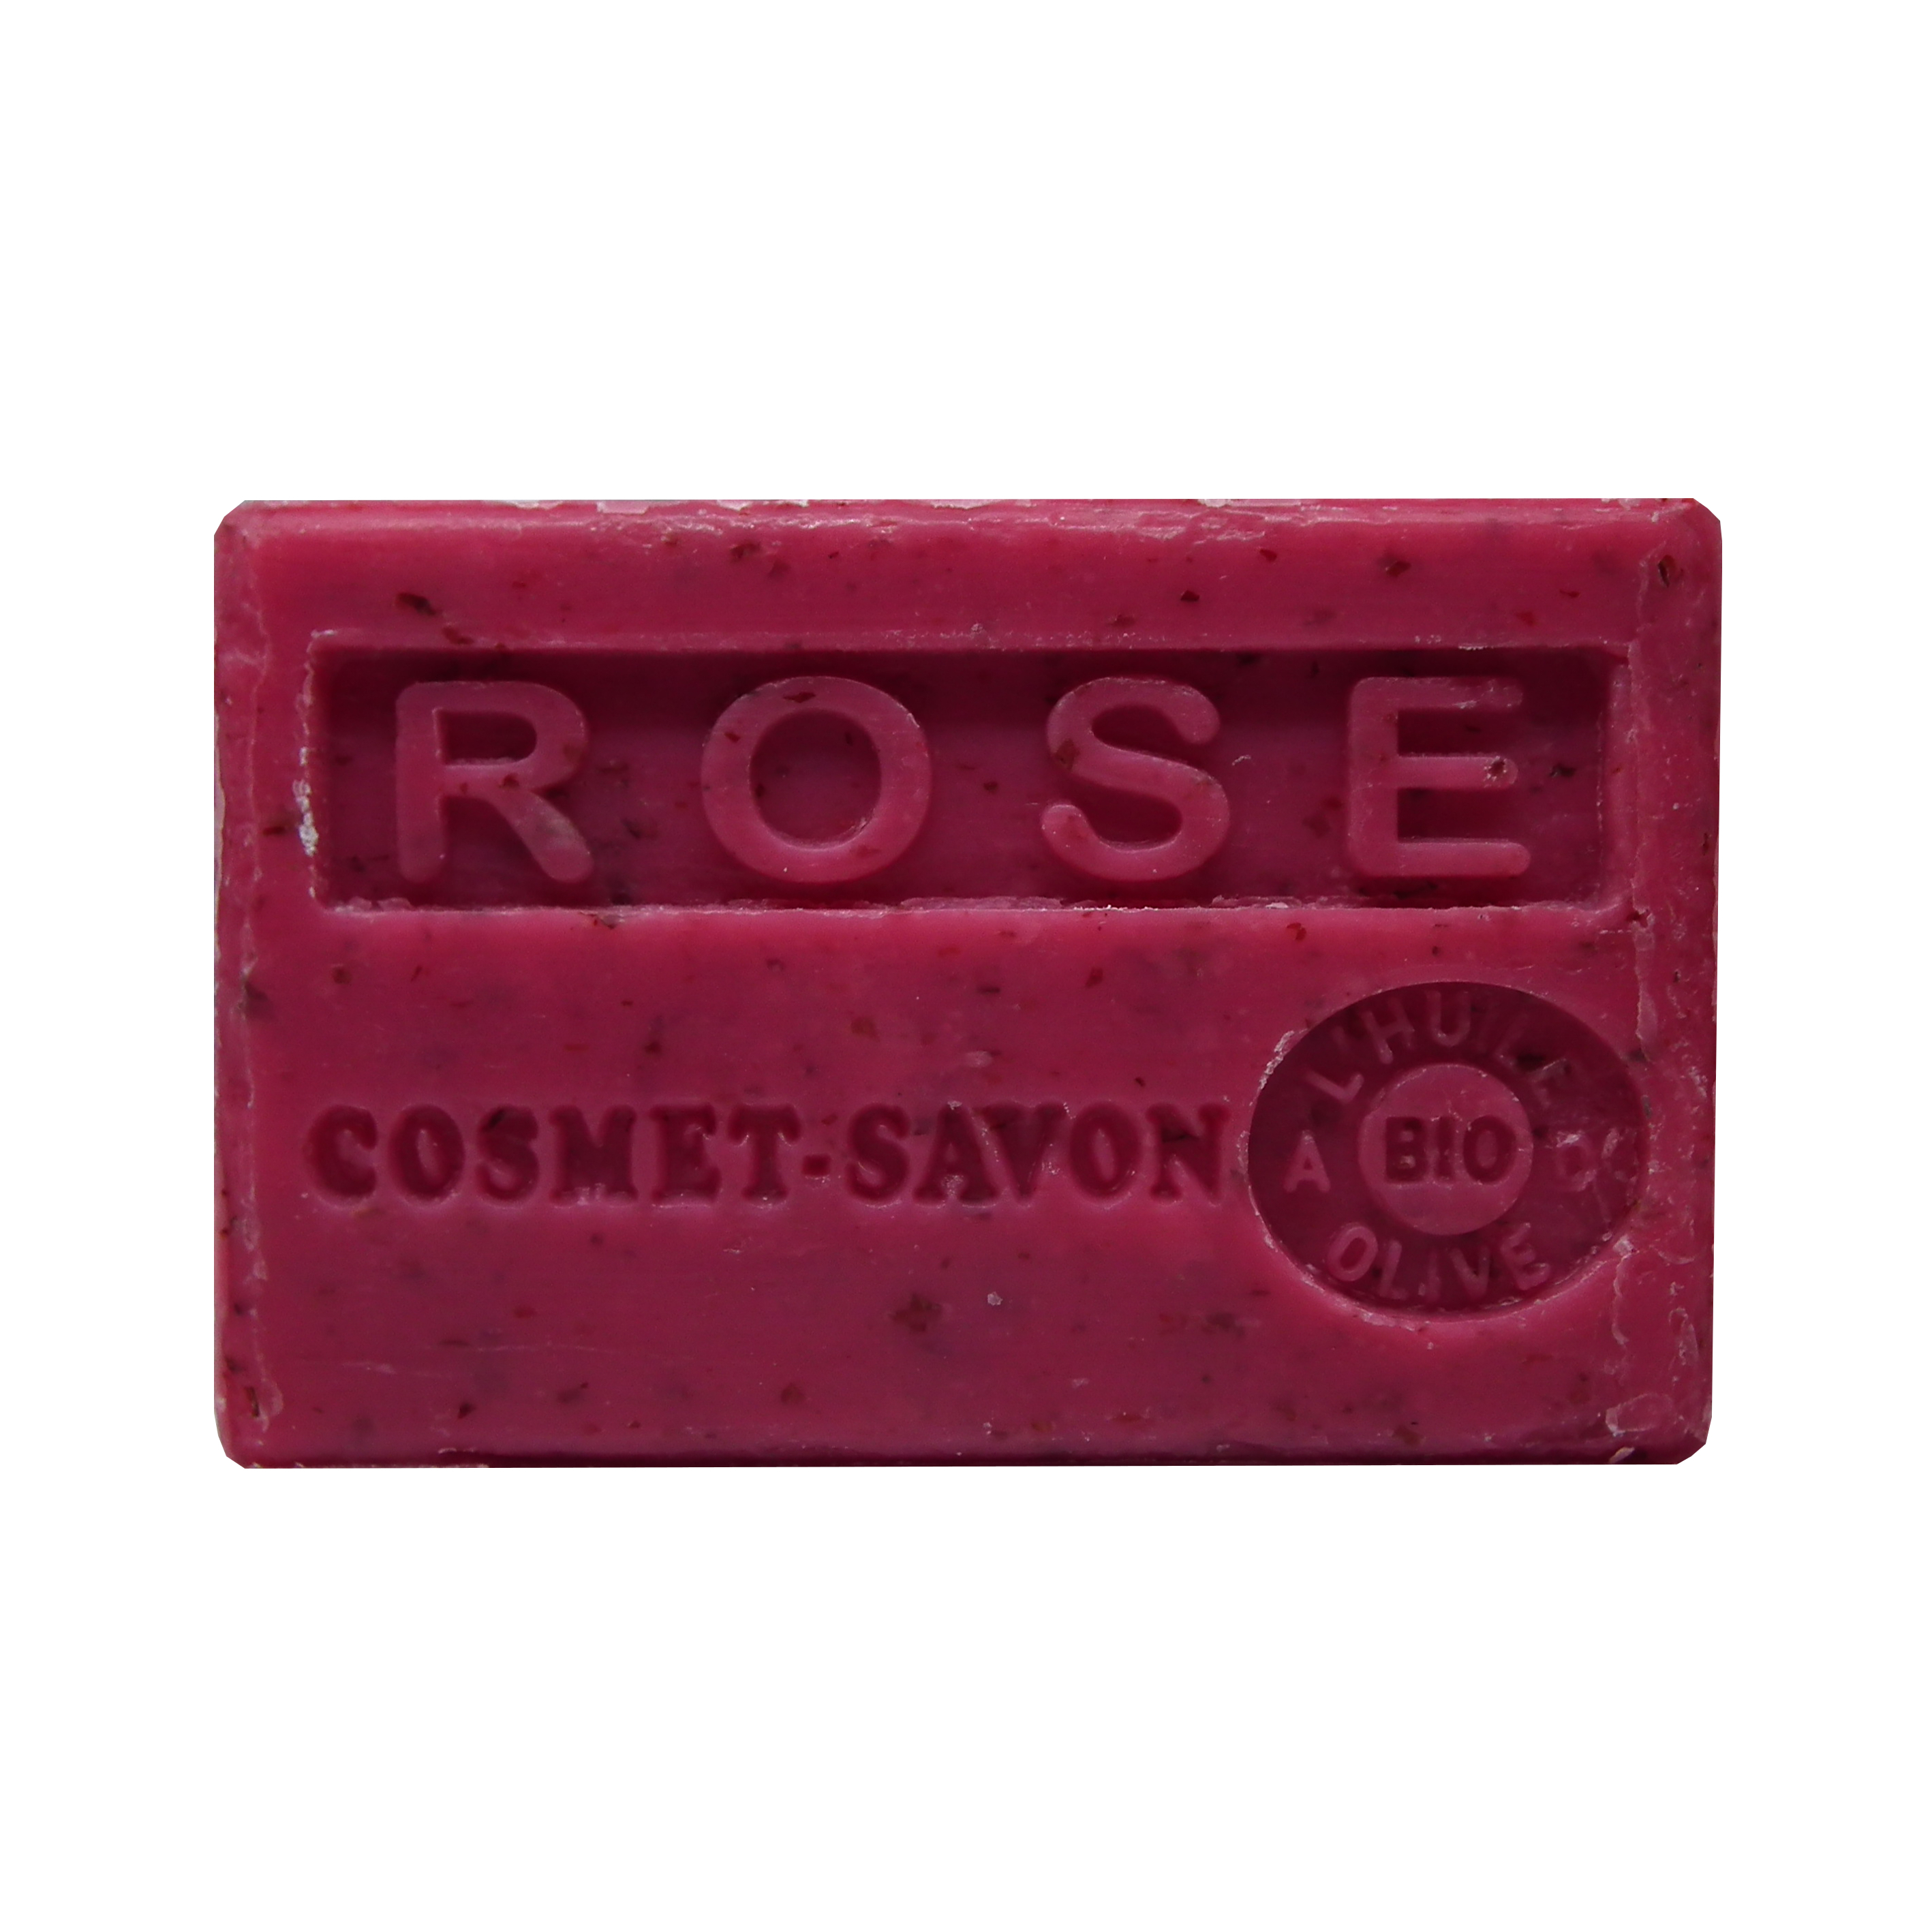 rose-musquee-b-savon-125gr-au-beurre-de-karite-bio-cosmet-savon-3665205006720-face-JPEG